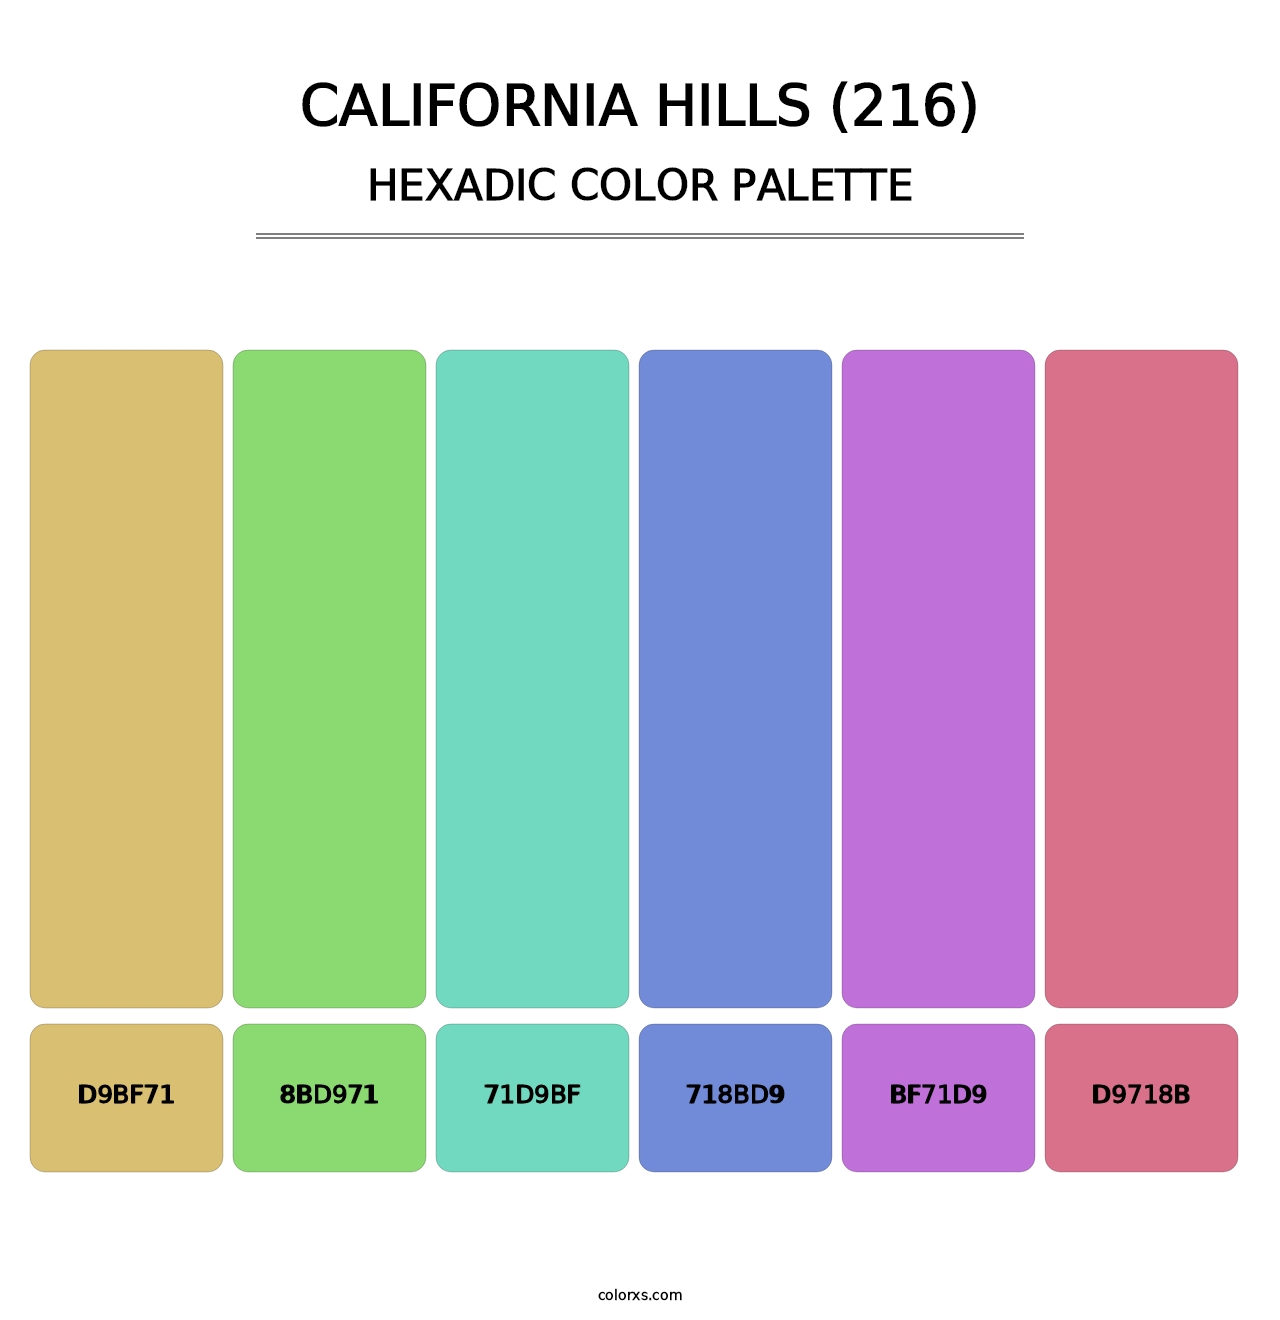 California Hills (216) - Hexadic Color Palette